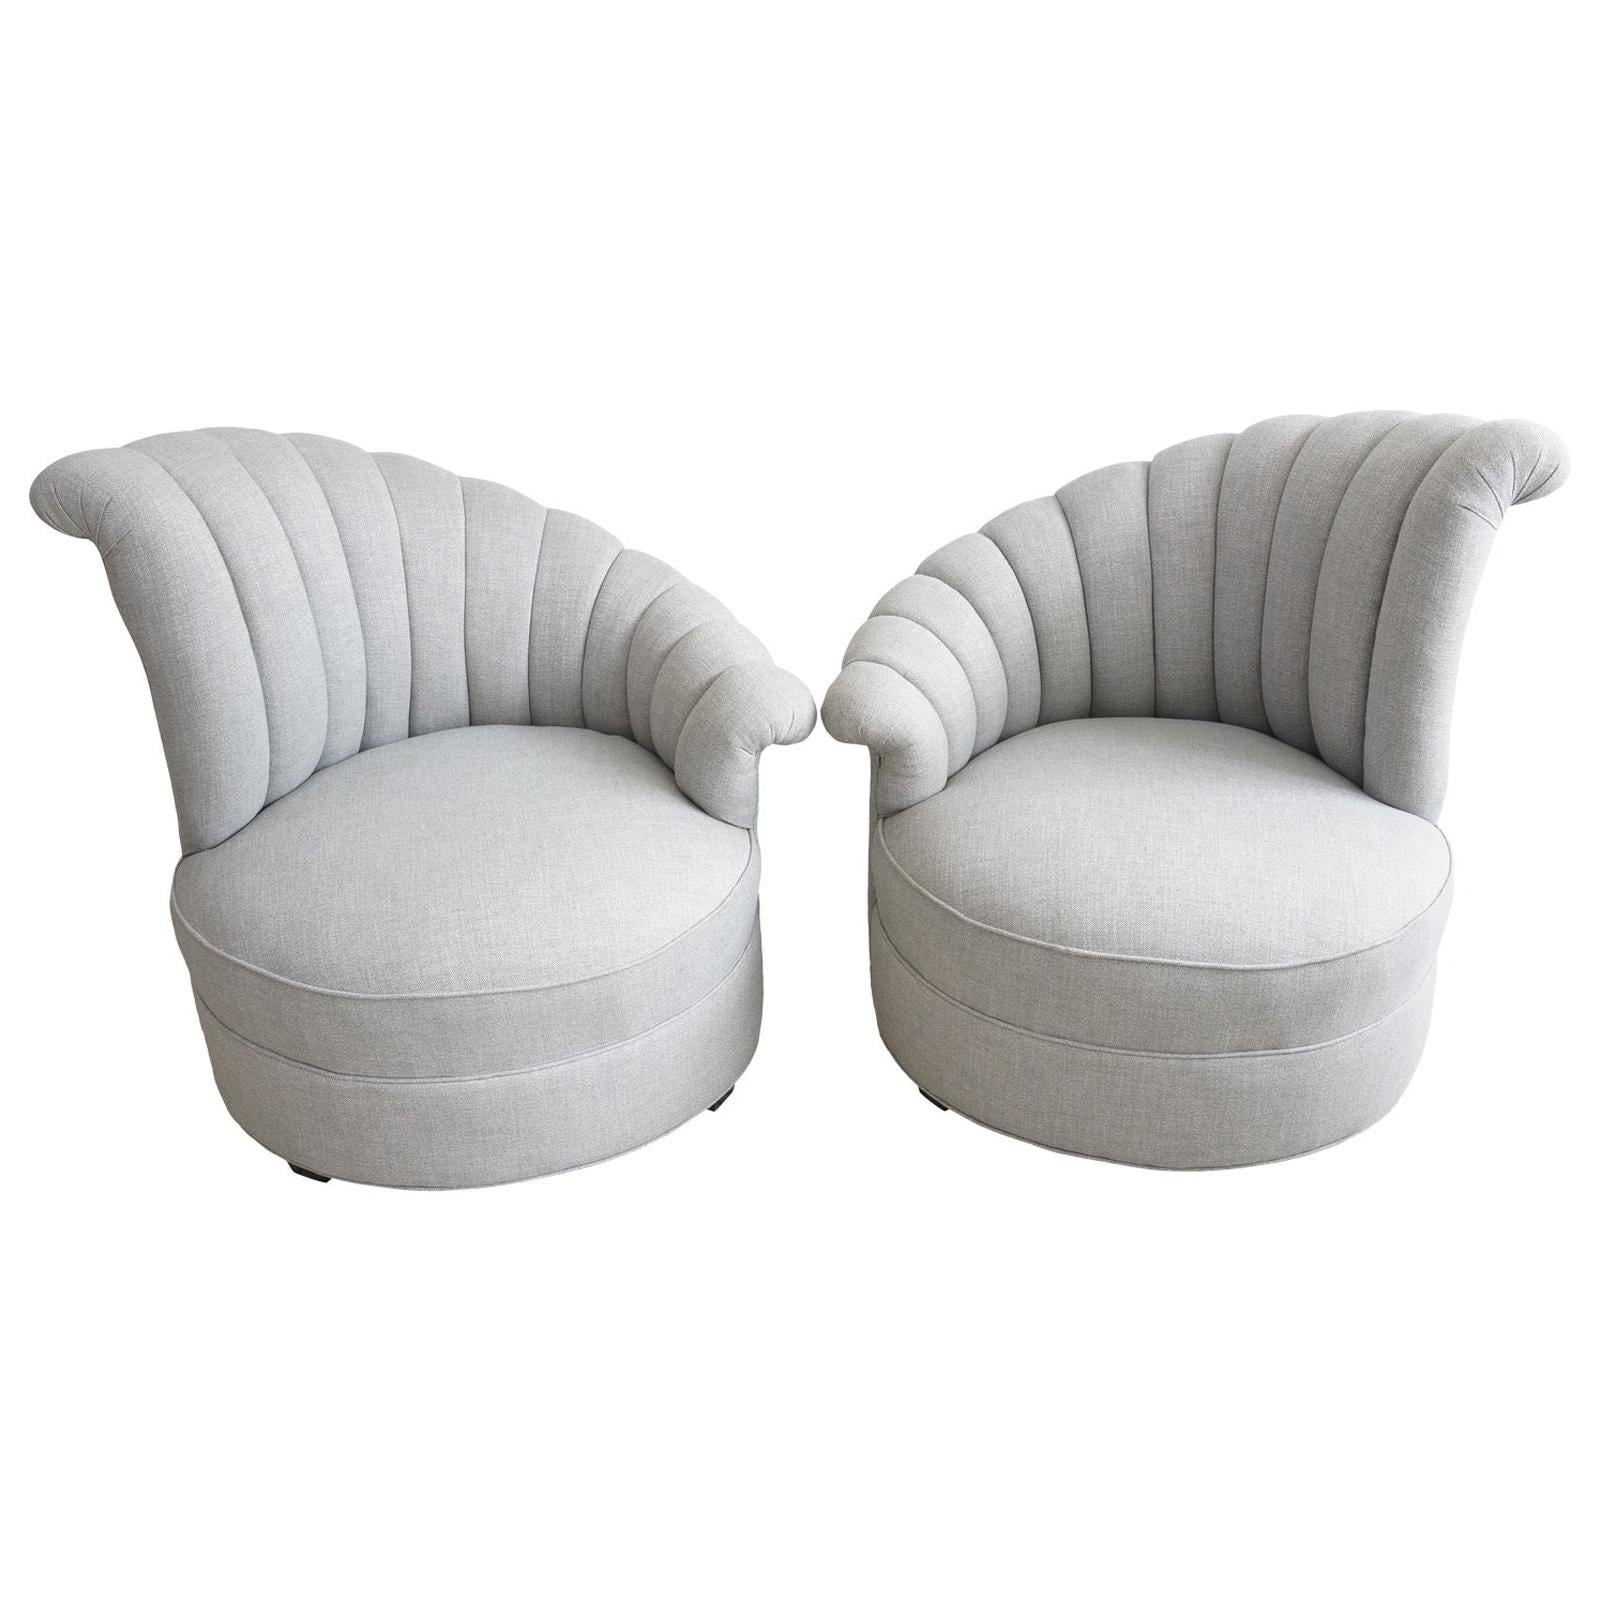 Pair of Grosfeld House Art Deco Lounge Chairs